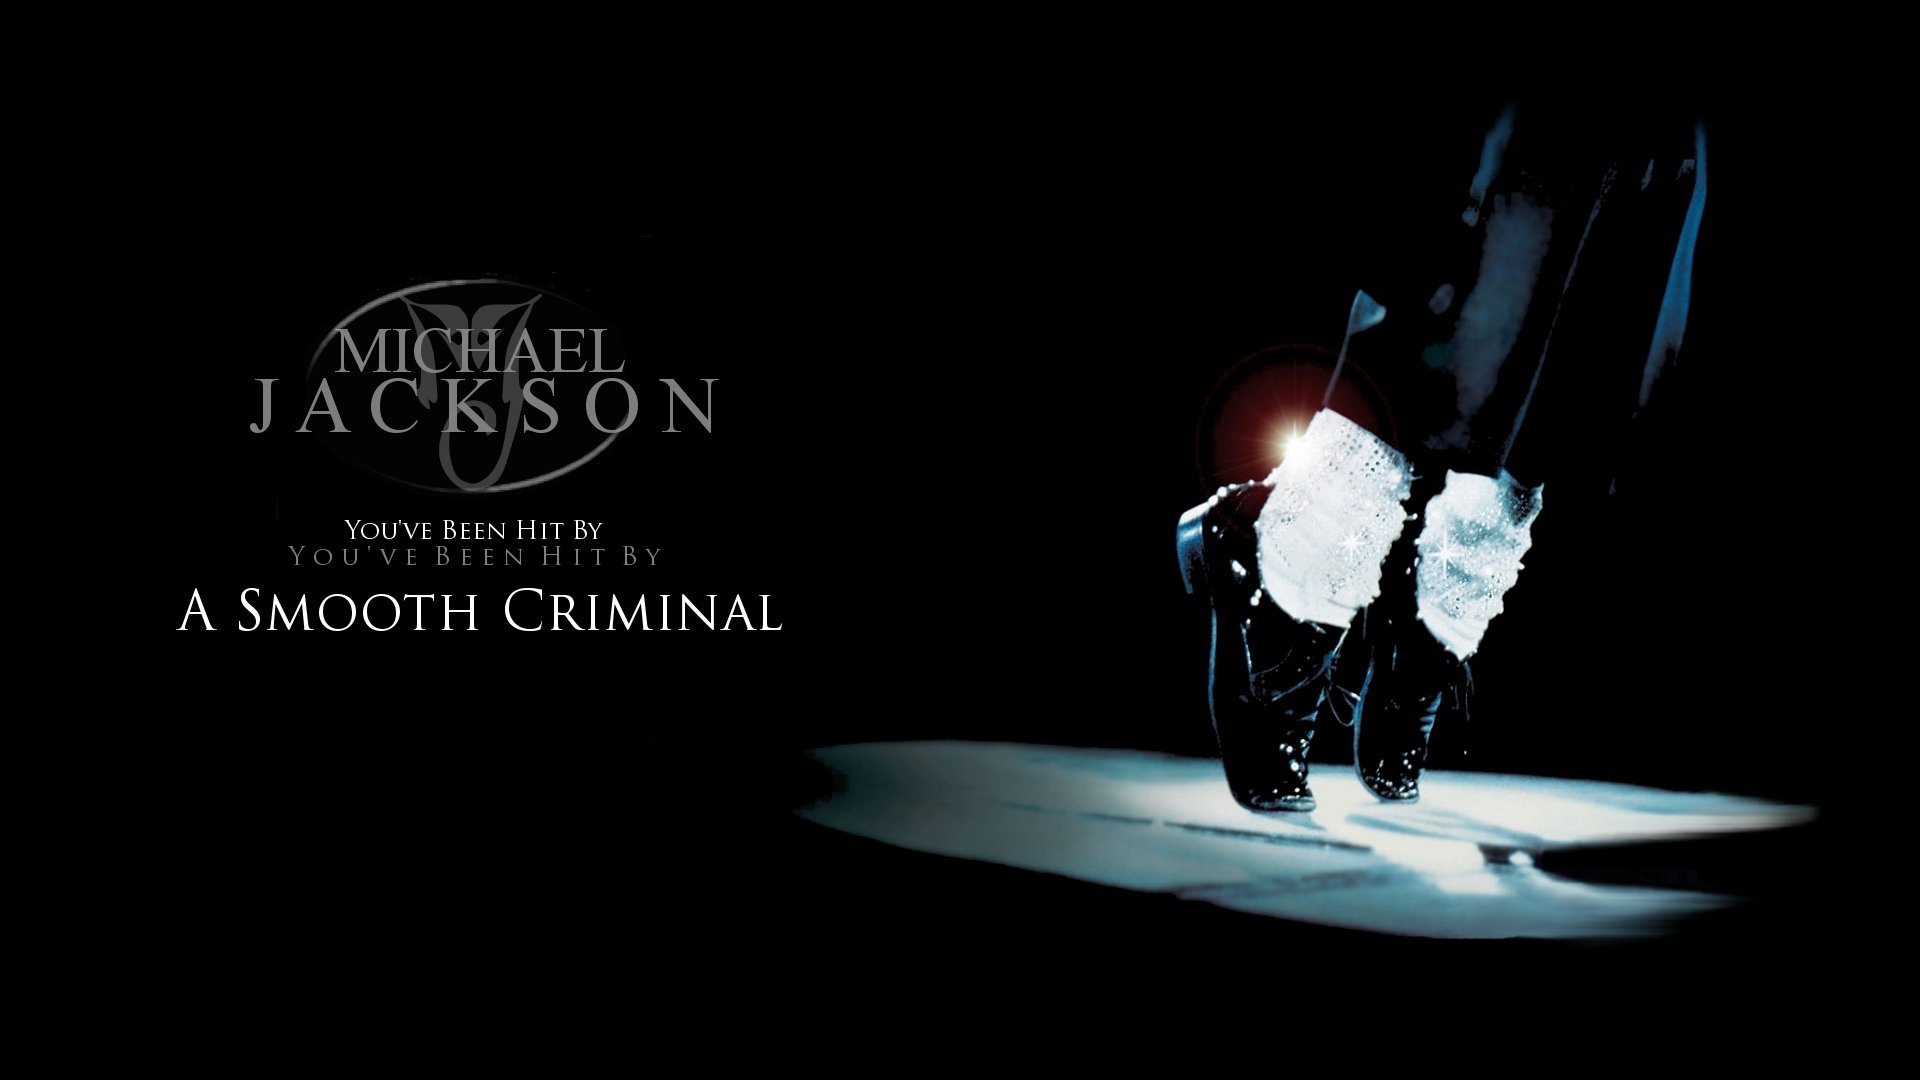 Michael Jackson SMOOTH CRIMINAL   Michael Jackson Wallpaper 7022137